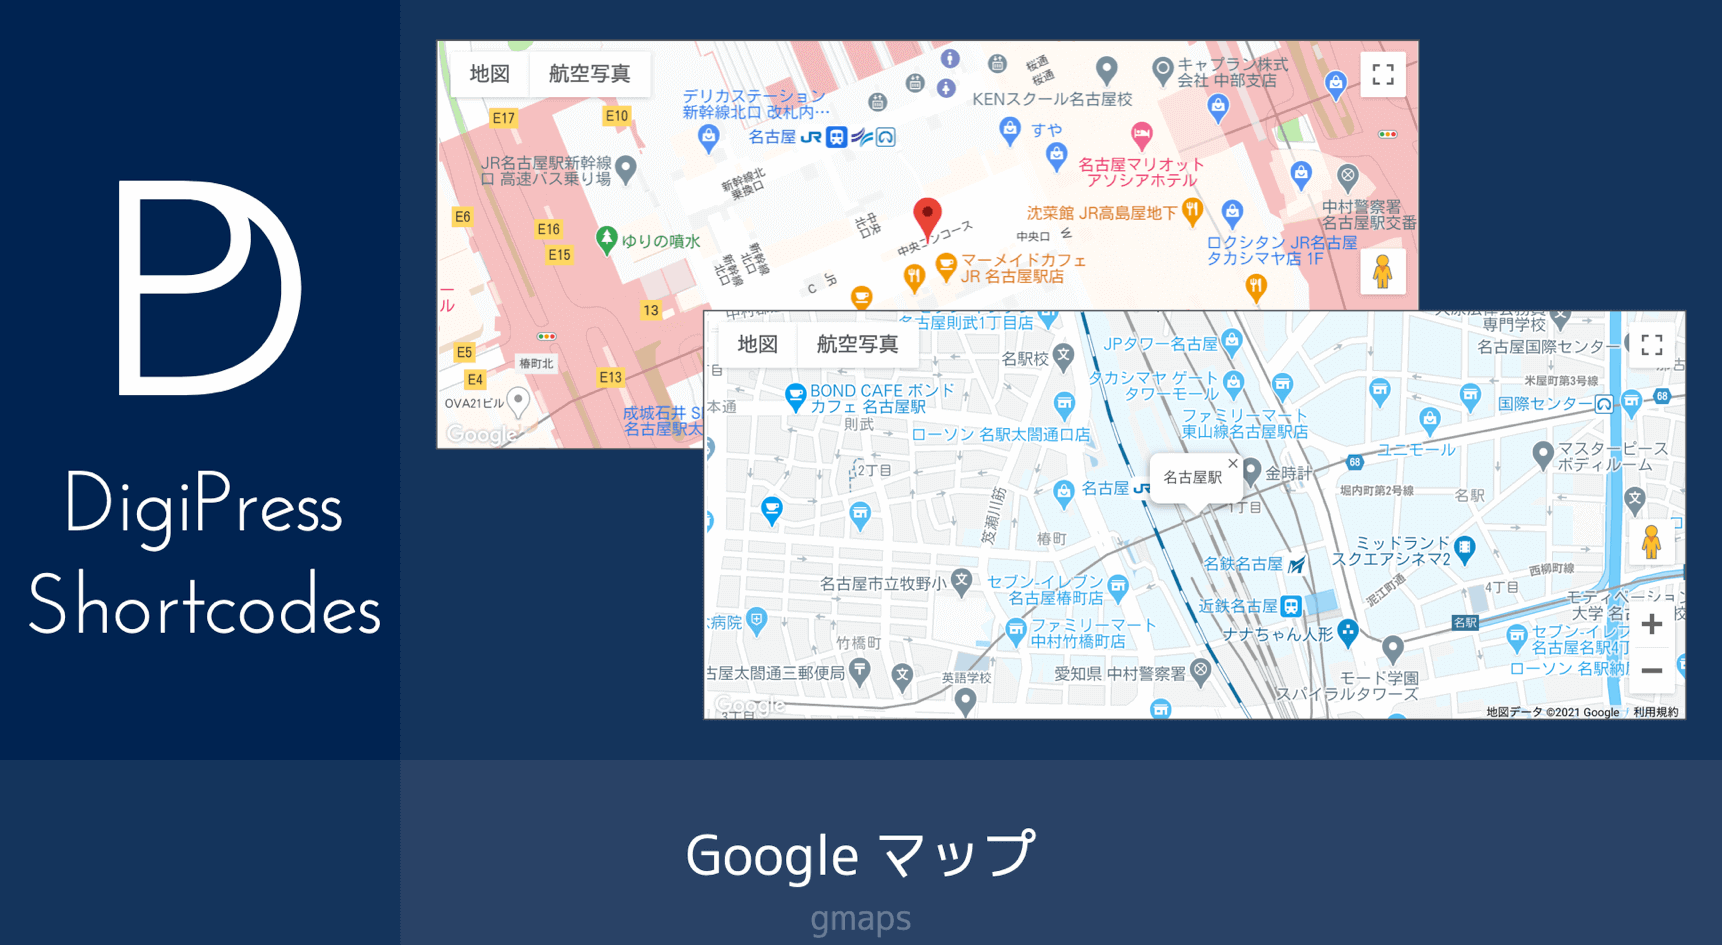 gmaps : Google Mapsの地図を表示